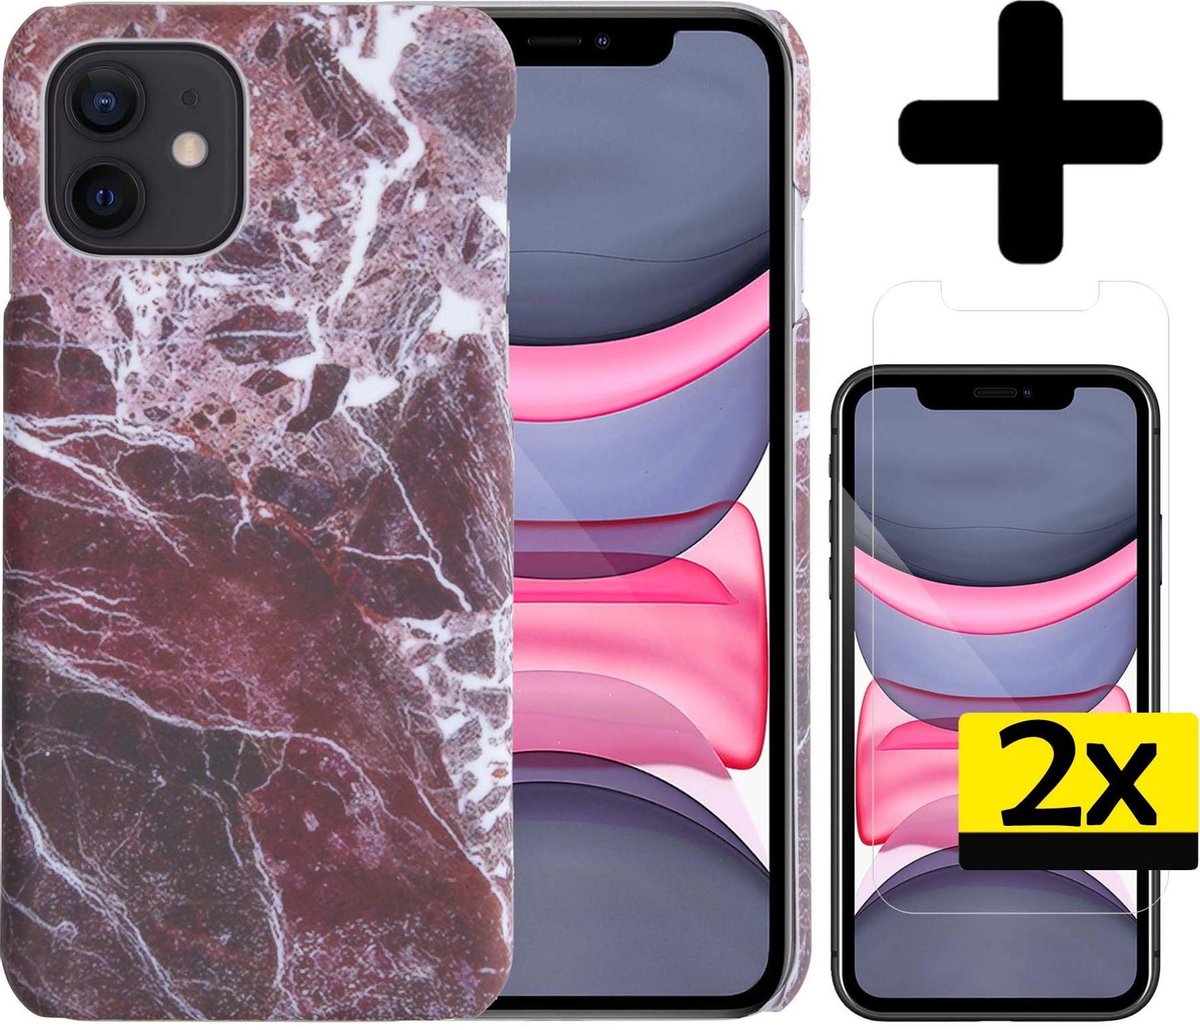 Hoes voor iPhone 11 Hoesje Marmer Case Rood Hard Cover Met 2x Screenprotector - Hoes voor iPhone 11 Case Marmer Hoesje Met 2x Screenprotector - Rood